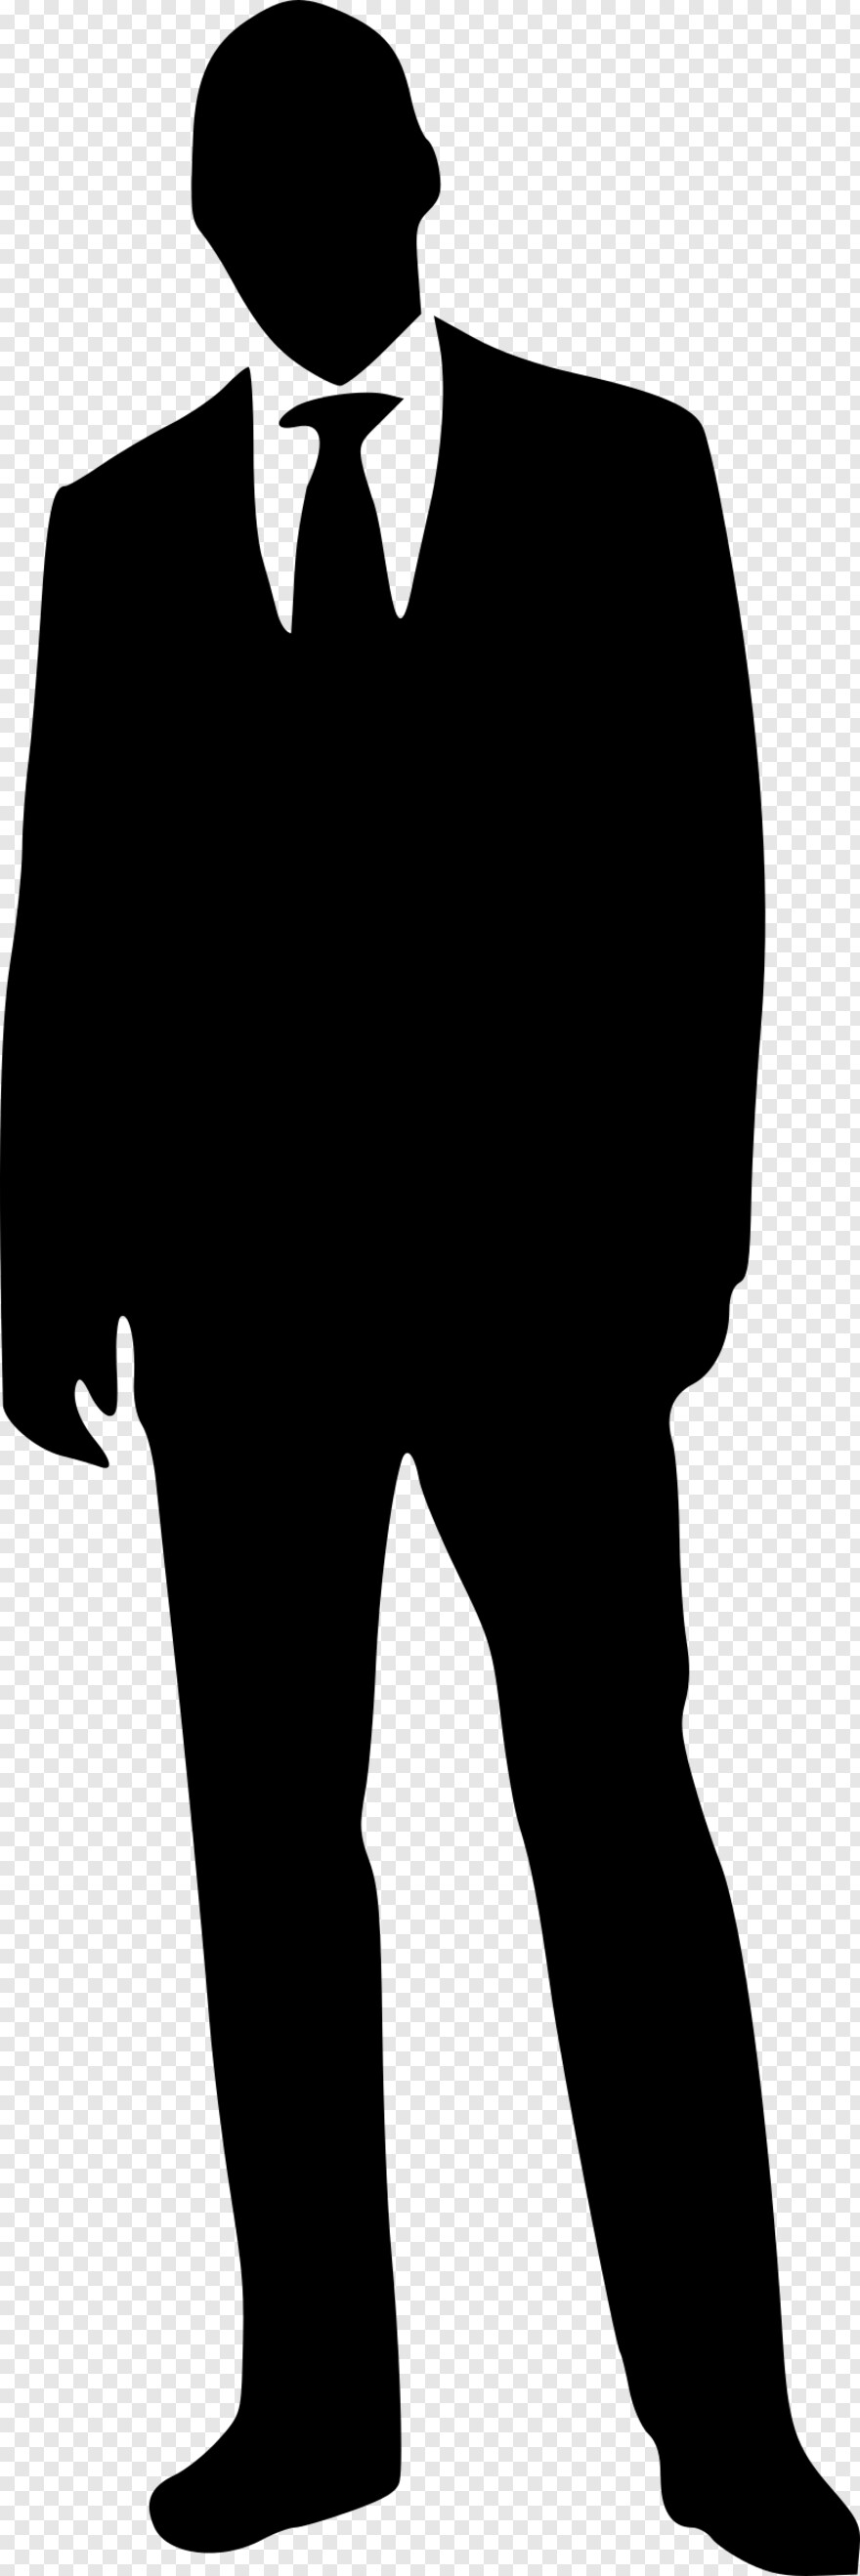 businessman-silhouette # 428115